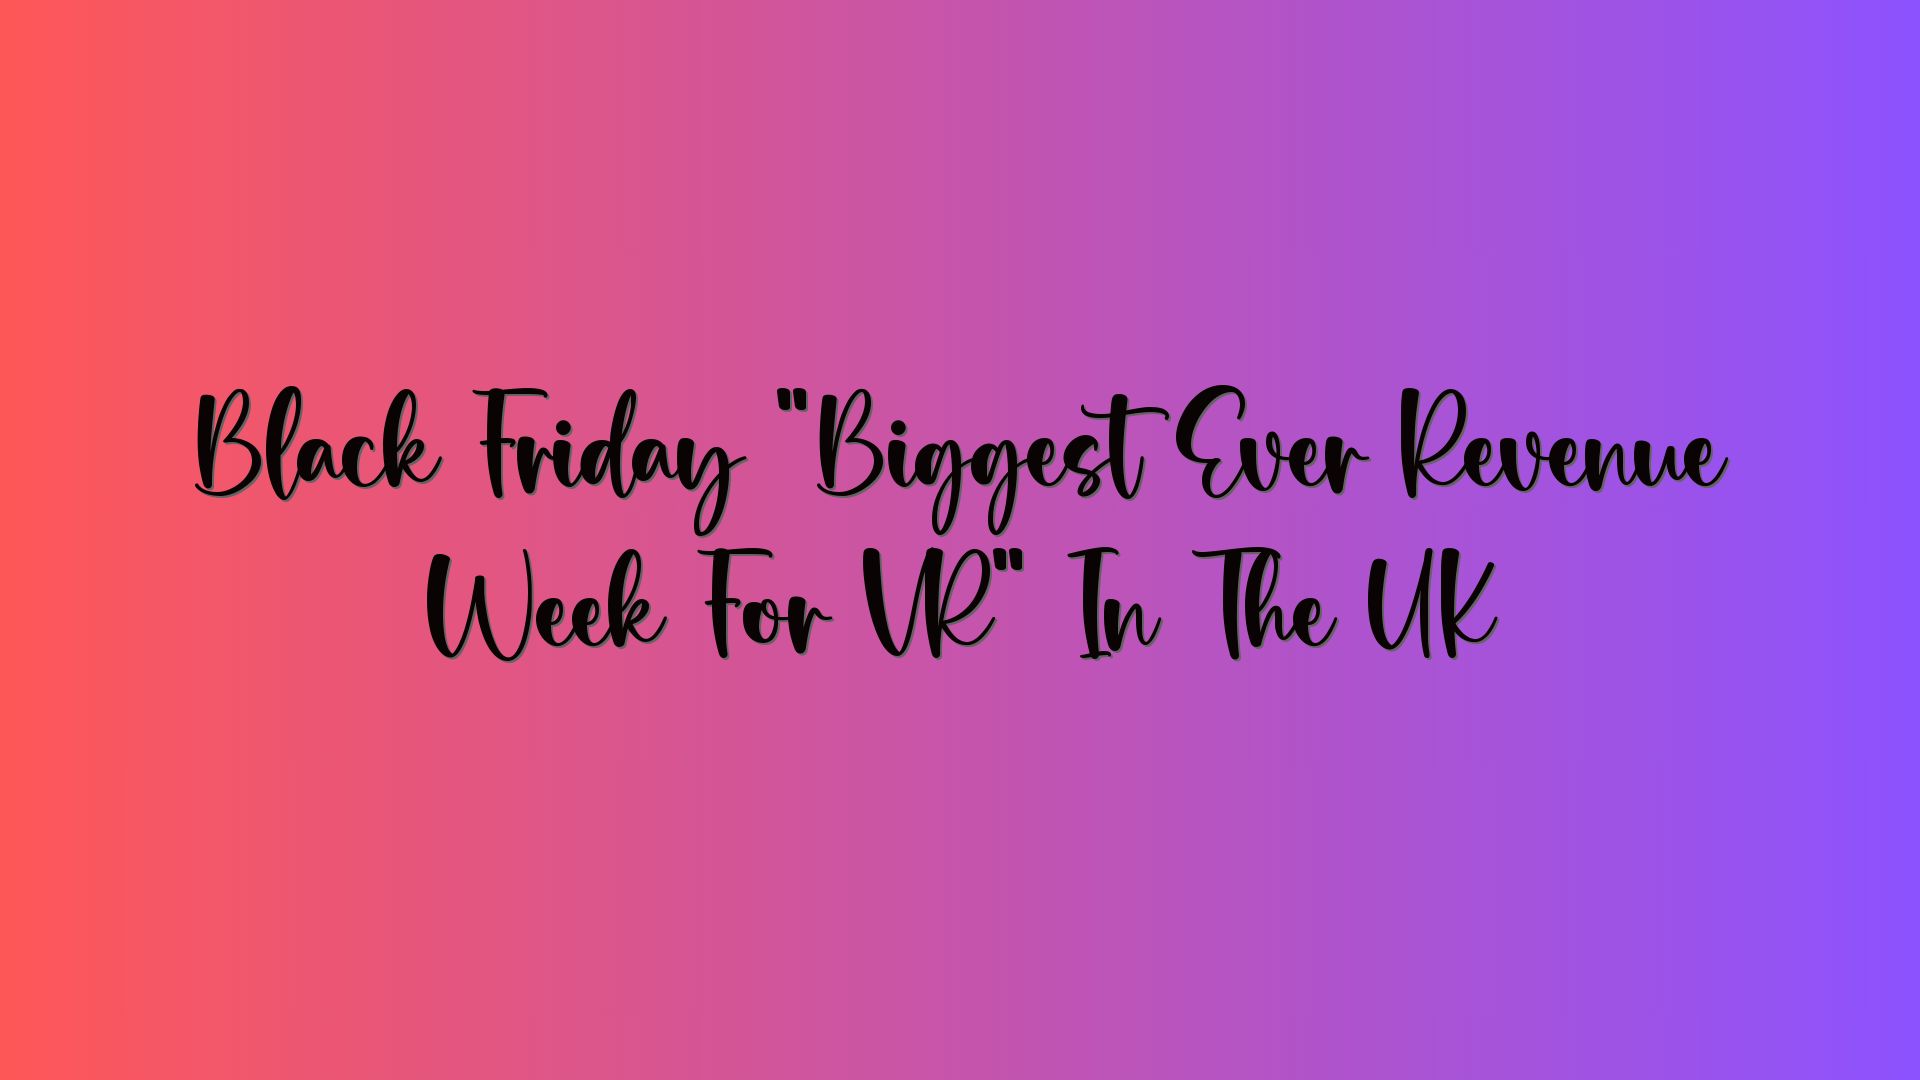 Black Friday “Biggest Ever Revenue Week For VR” In The UK